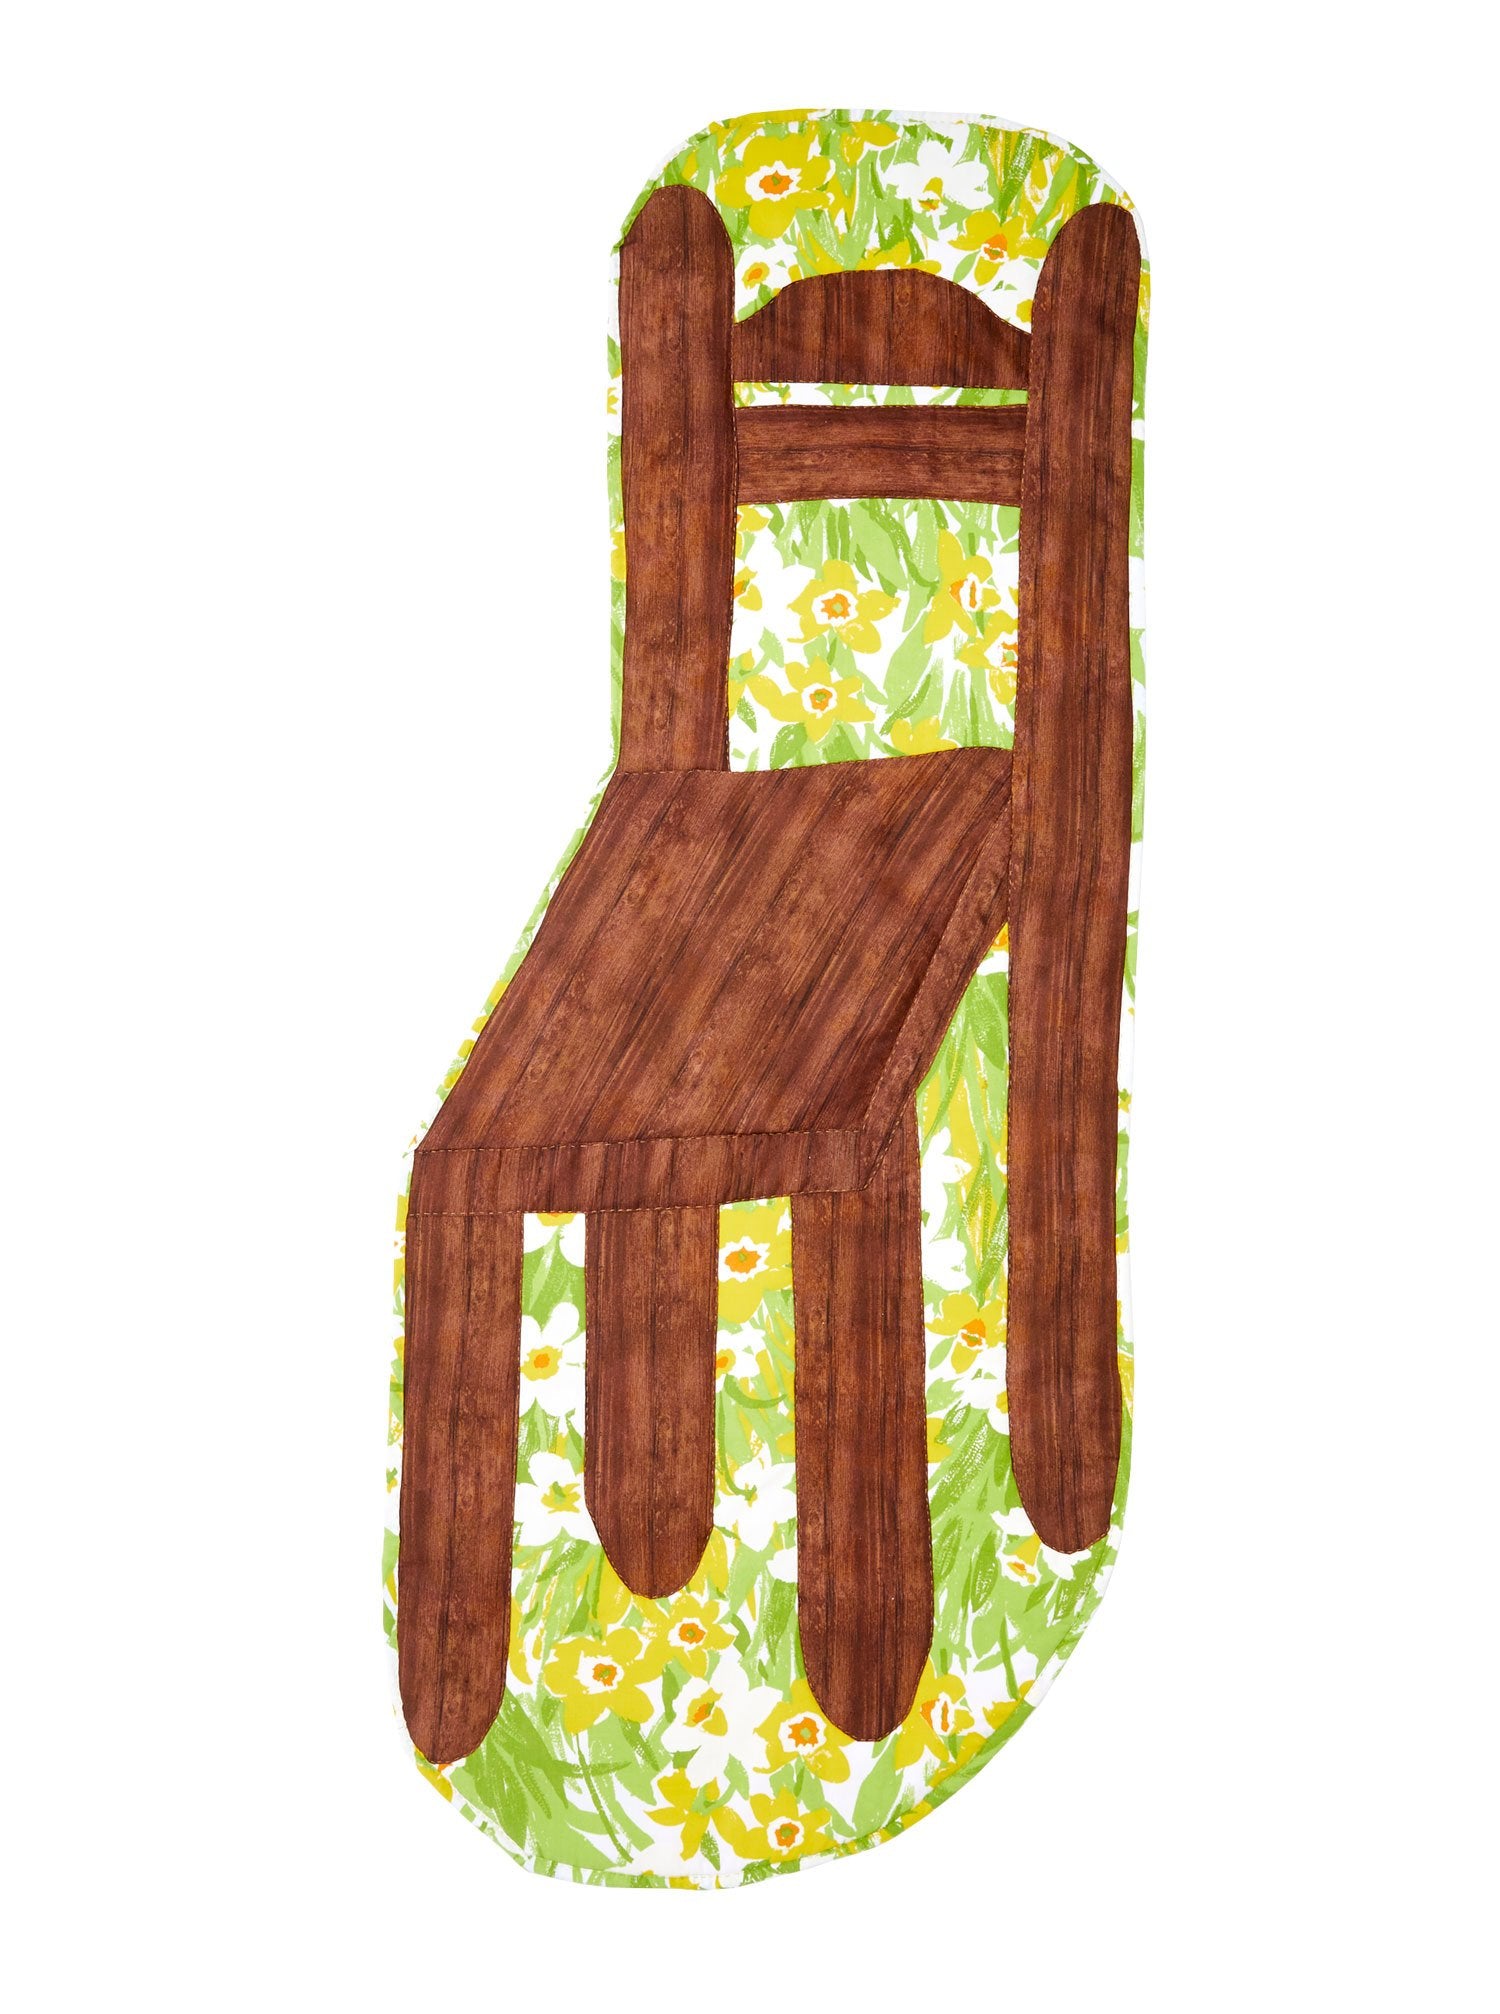 Natalie Baxter, Daisy Chair (2022)